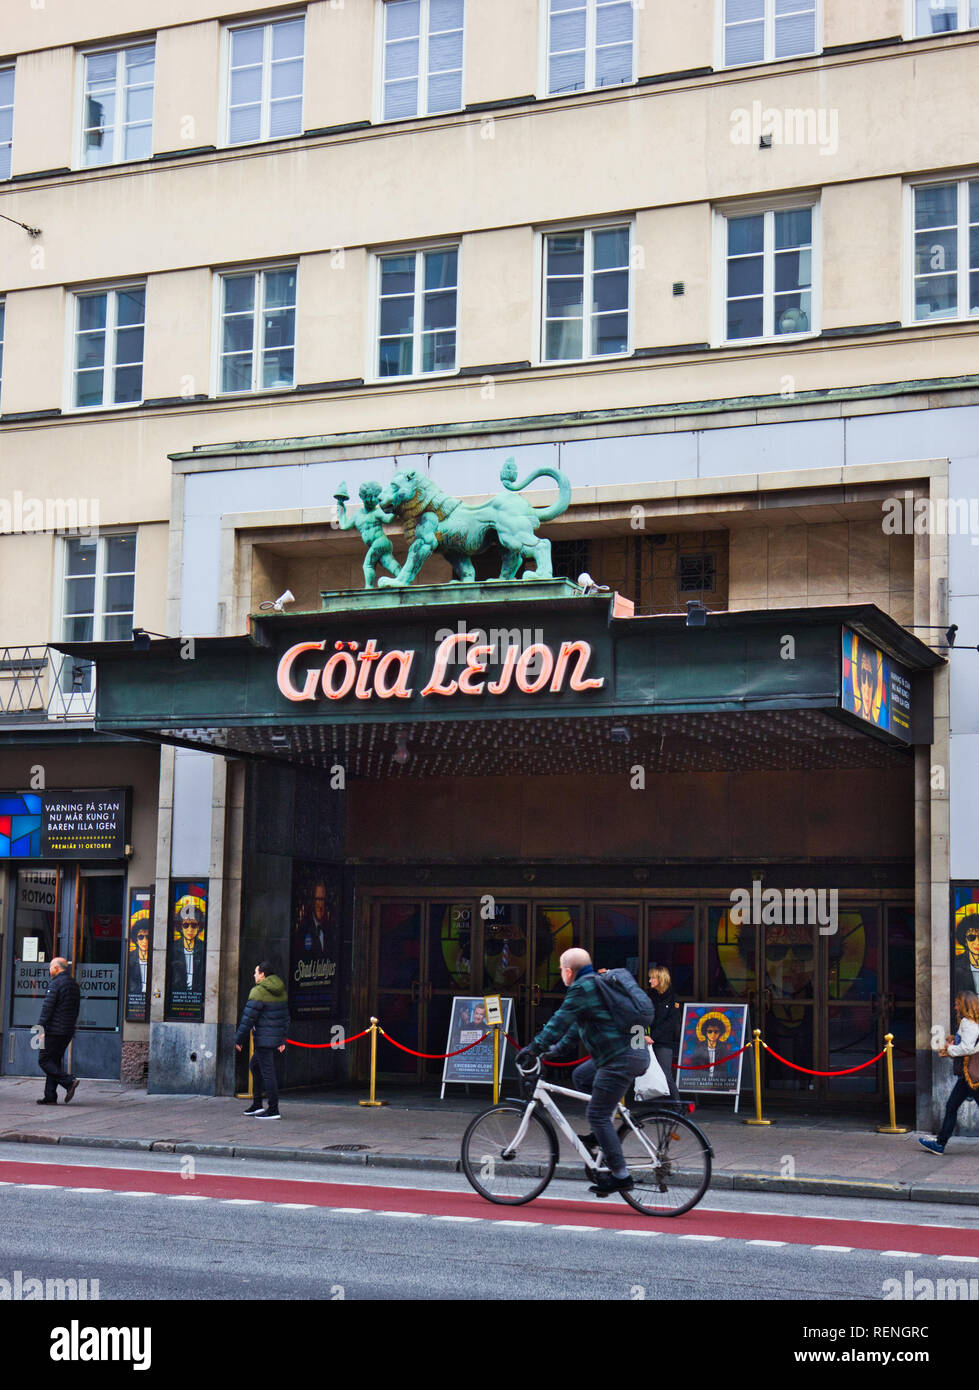 Gota Lejon theatre, Gotgatan, Sodermalm, Stockholm, Sweden, Scandinavia Stock Photo